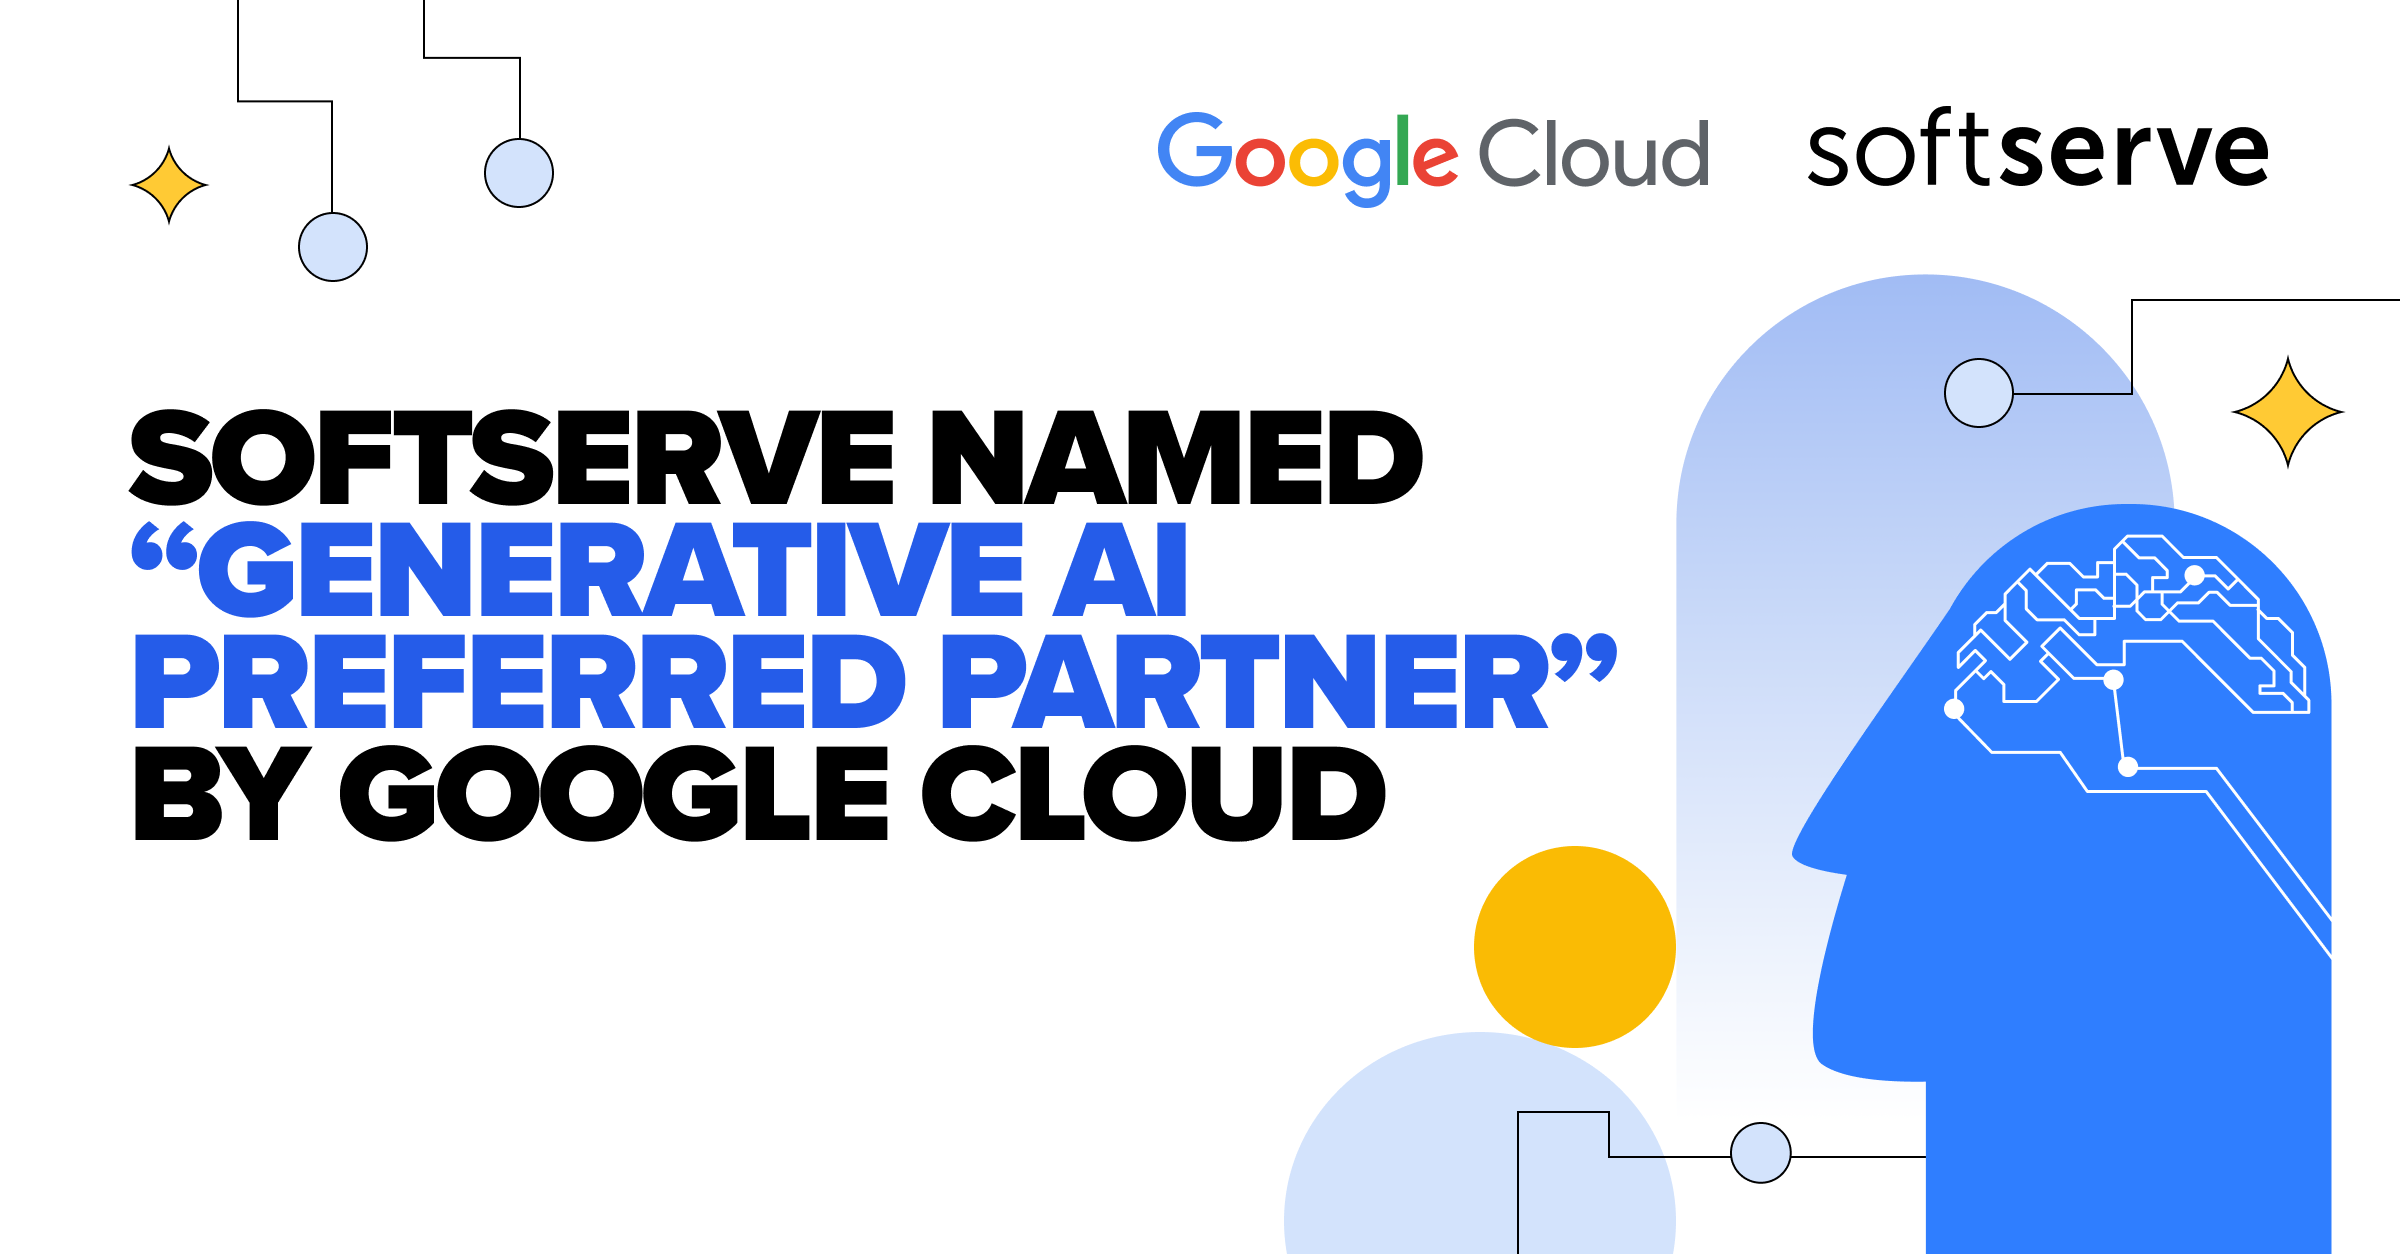 softserve-expands-google-cloud-partnership-in-generative-ai-social